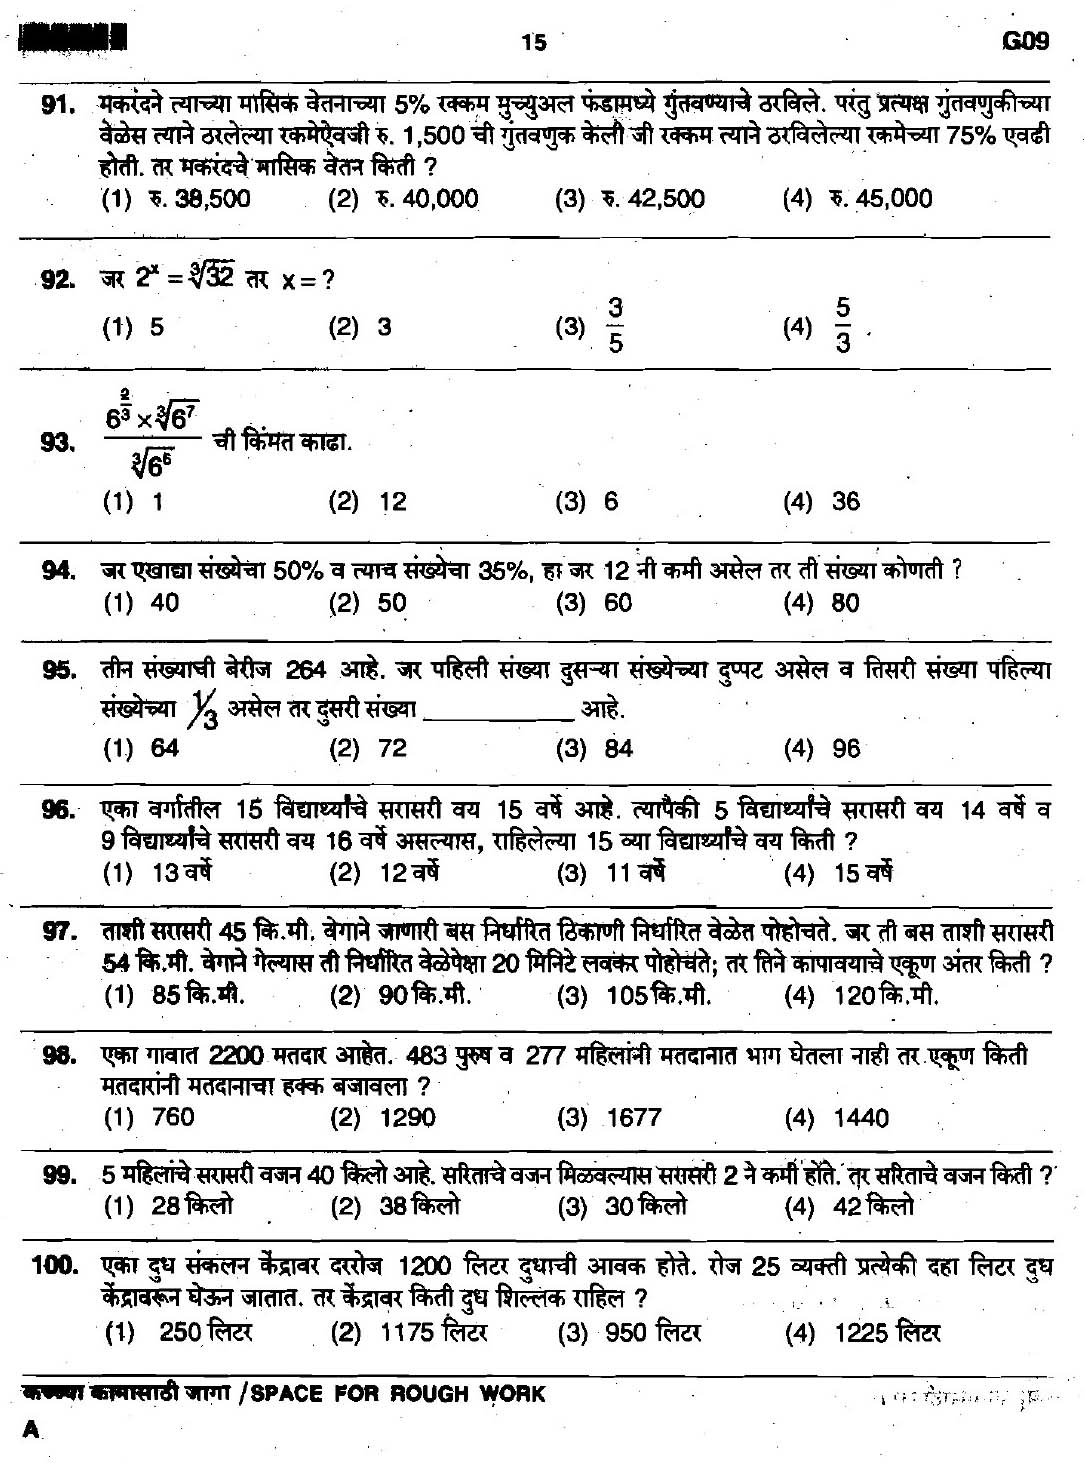 Maharashtra PSC Clerk Typist Preliminary Exam Question Paper 2017 14